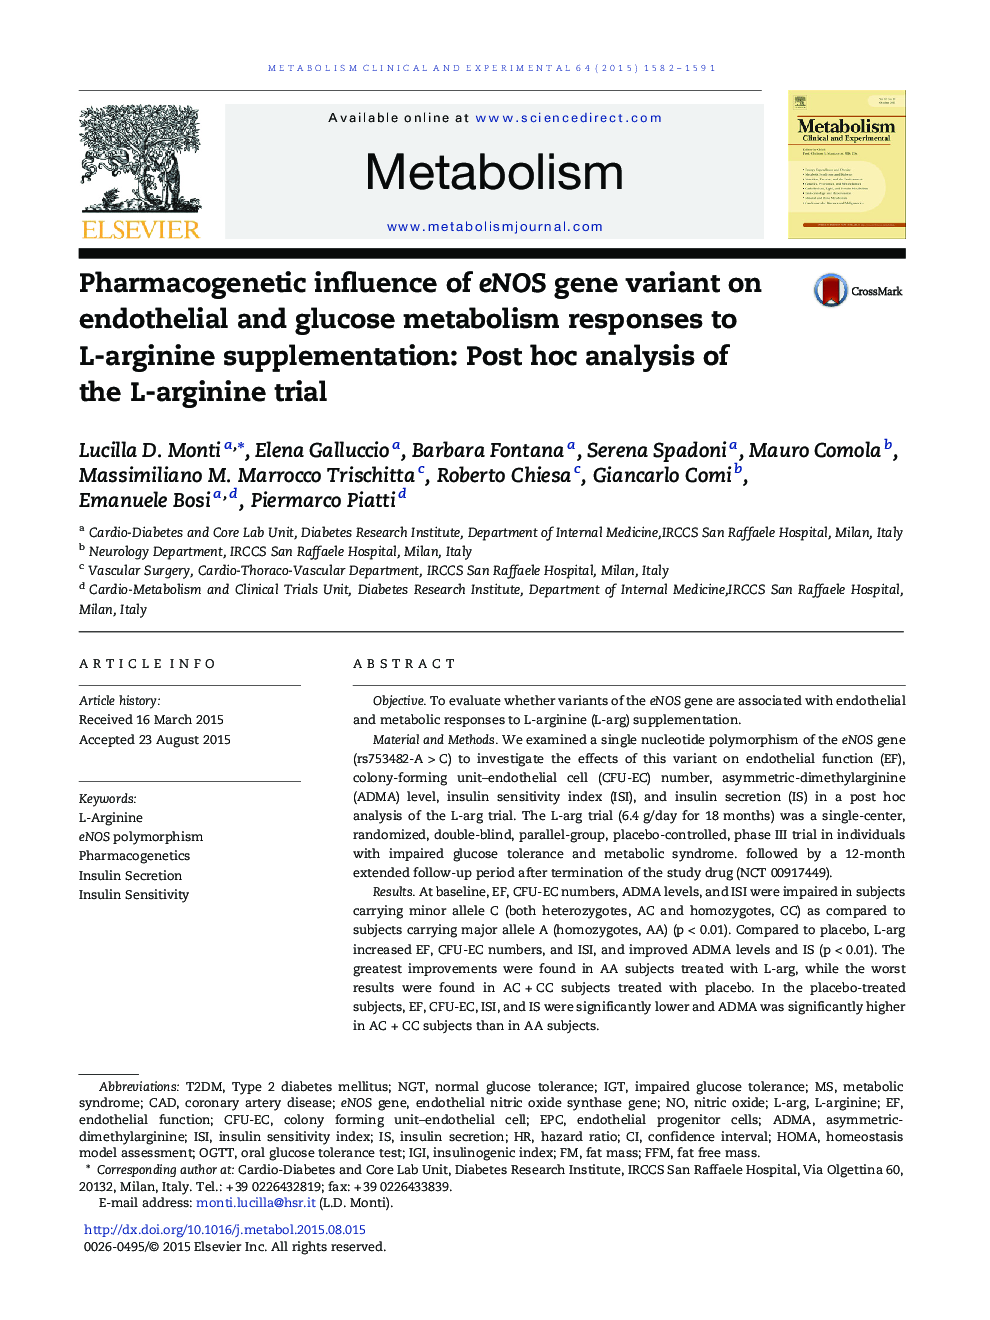 Pharmacogenetic influence of eNOS gene variant on endothelial and glucose metabolism responses to L-arginine supplementation: Post hoc analysis of the L-arginine trial